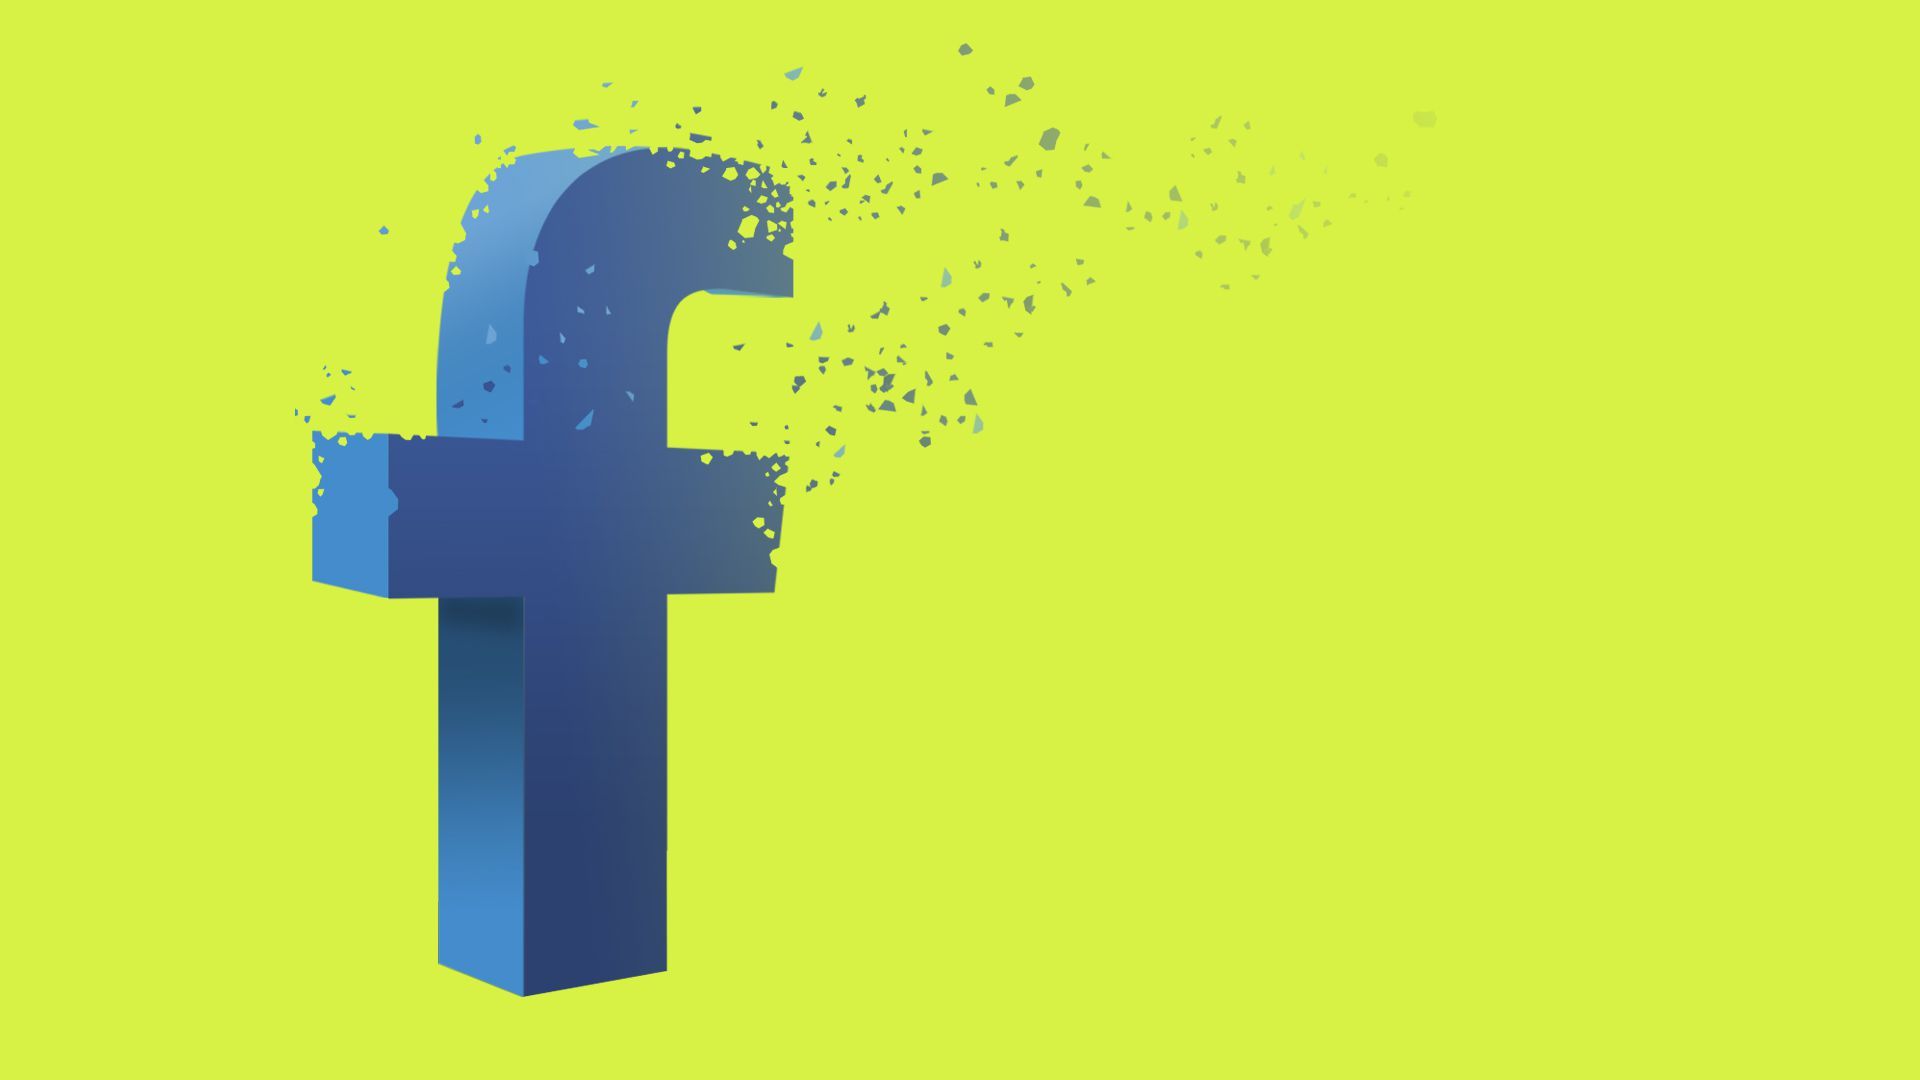 An illustration of Facebook's "F" logo breaking apart